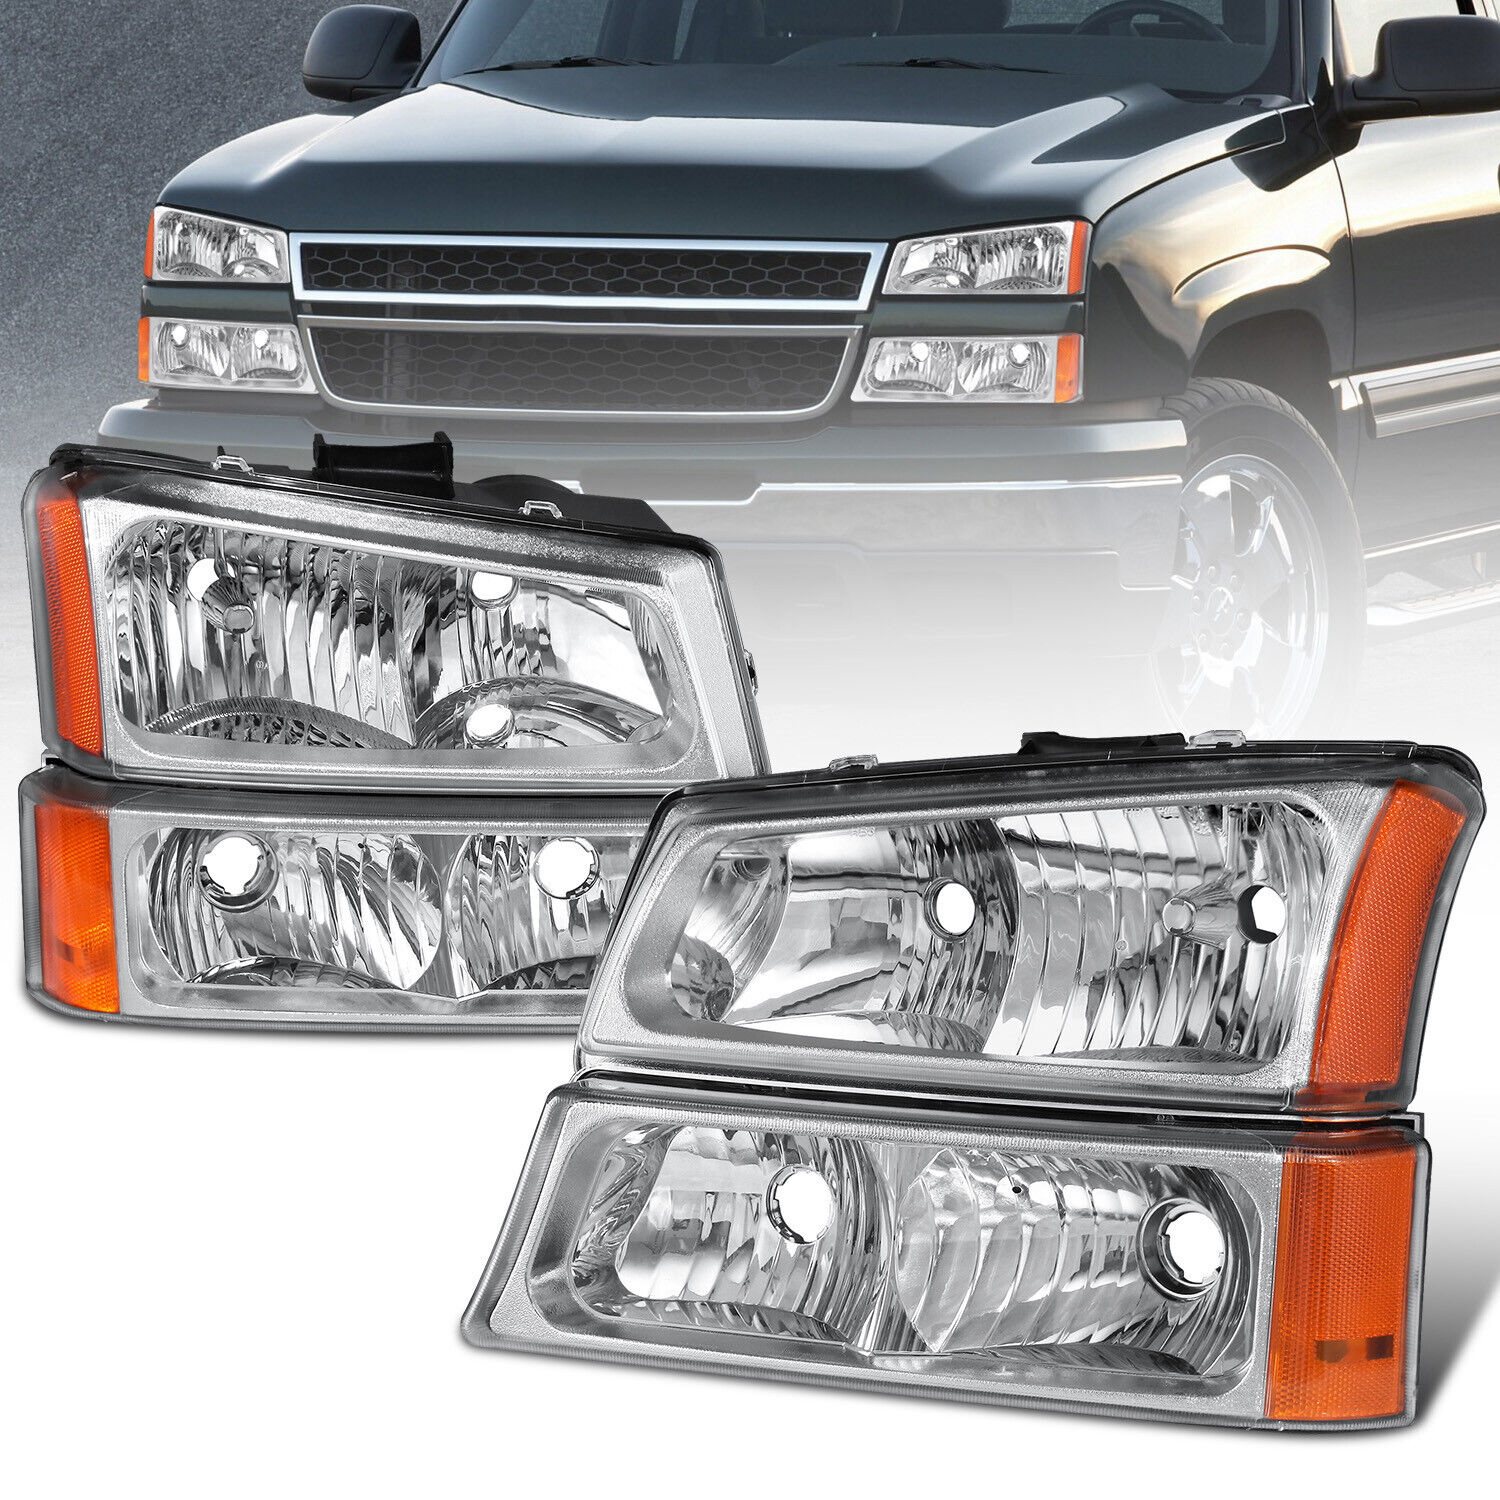 Chrome Headlight For 03-06 Chevy Silverado Avalance 1500 2500 3500 HD Front Lamp